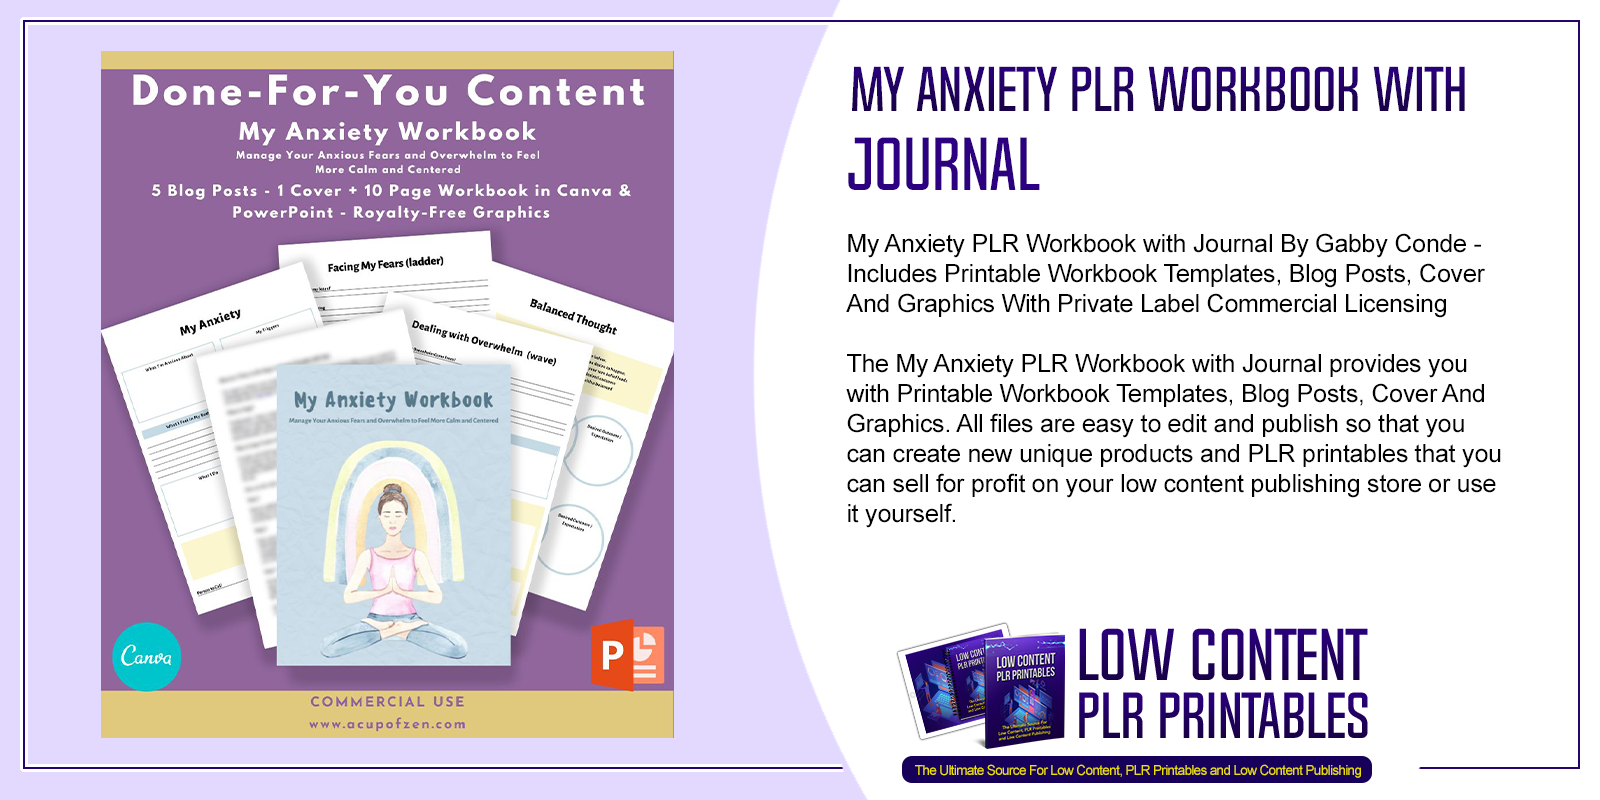 My Anxiety PLR Workbook with Journal